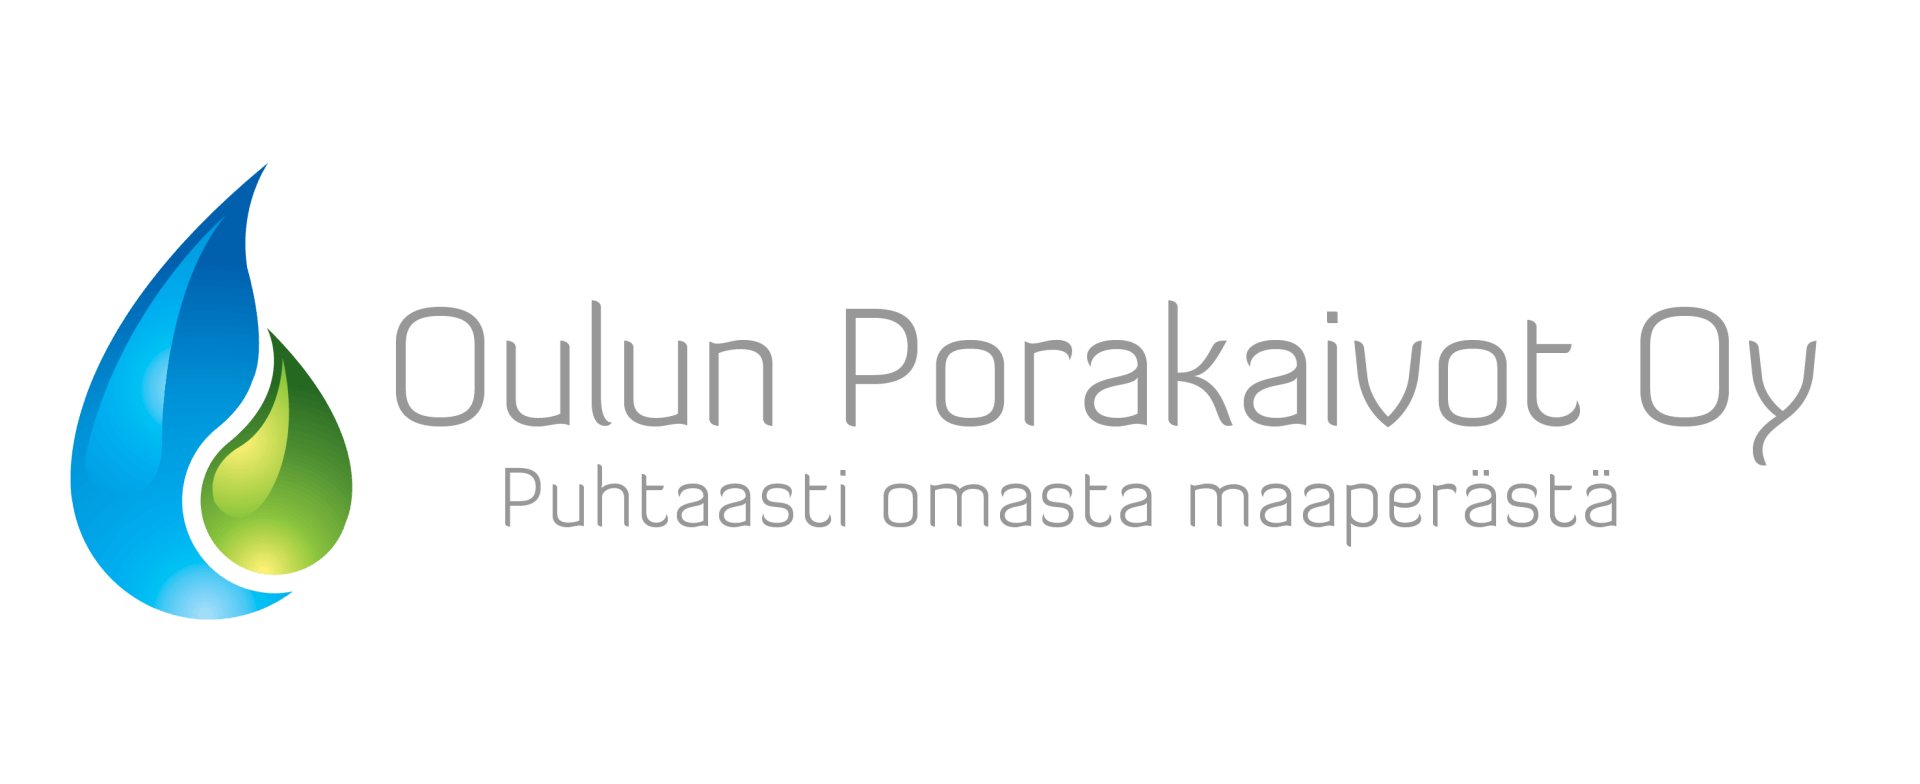 Oulun Porakaivot Oy